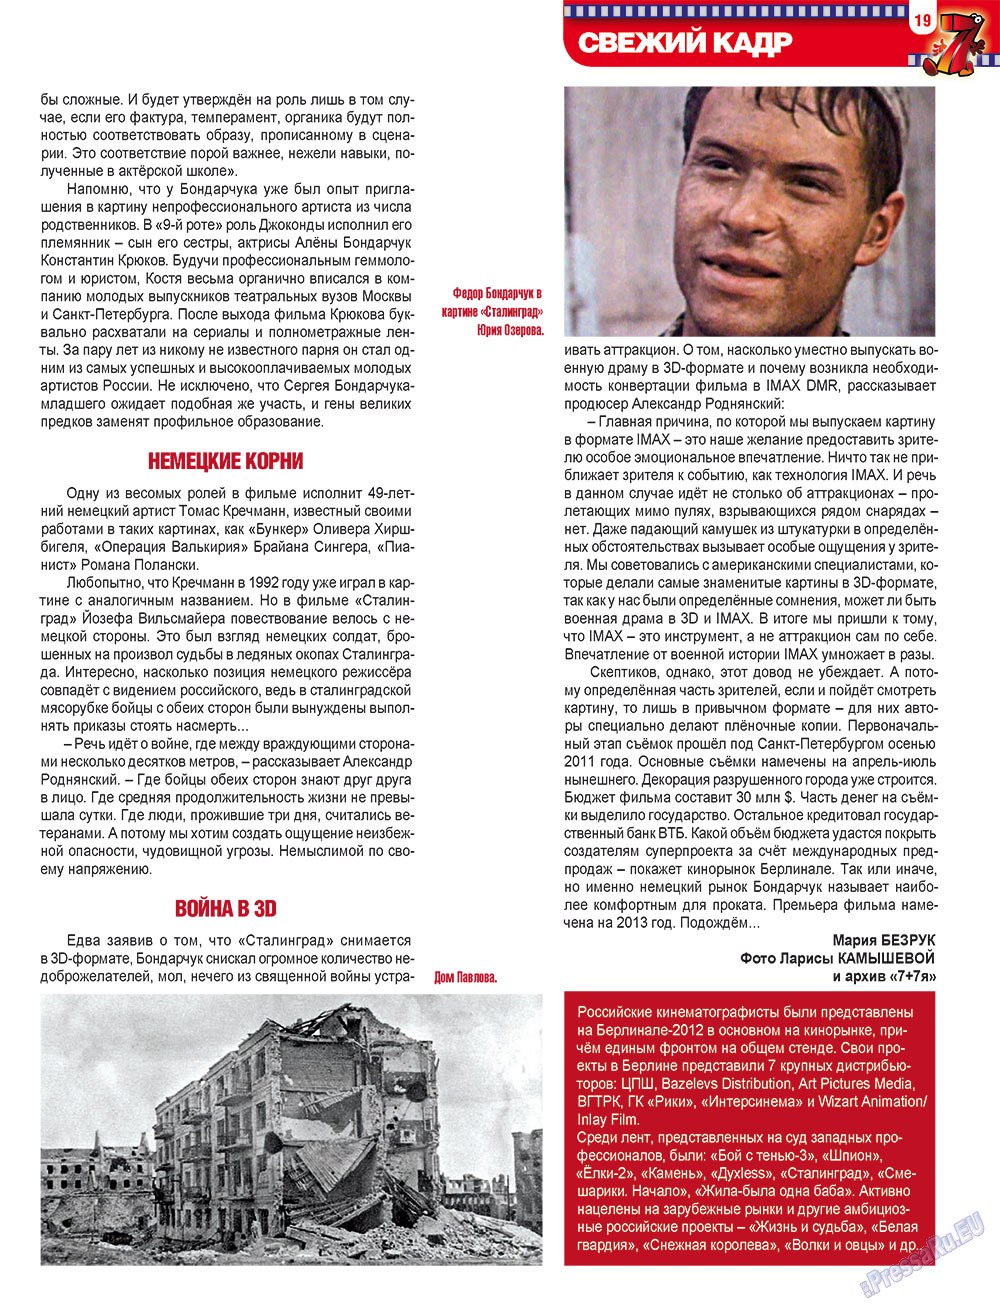 7плюс7я (журнал). 2012 год, номер 8, стр. 19